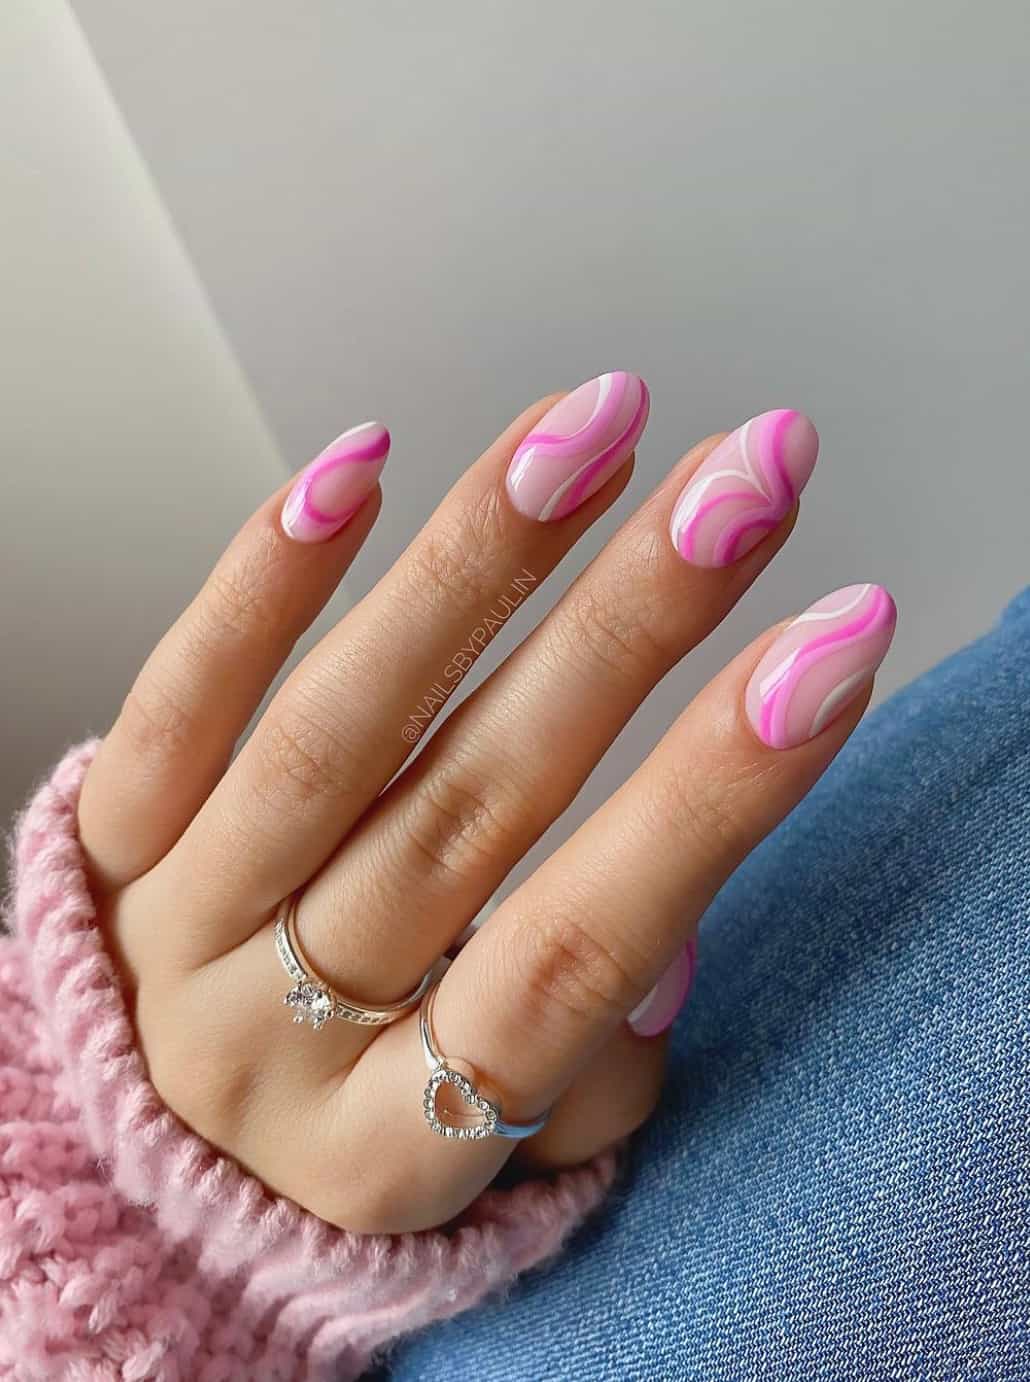 A hand with light pink round nails featuring dark pink, medium pink, and white swirls